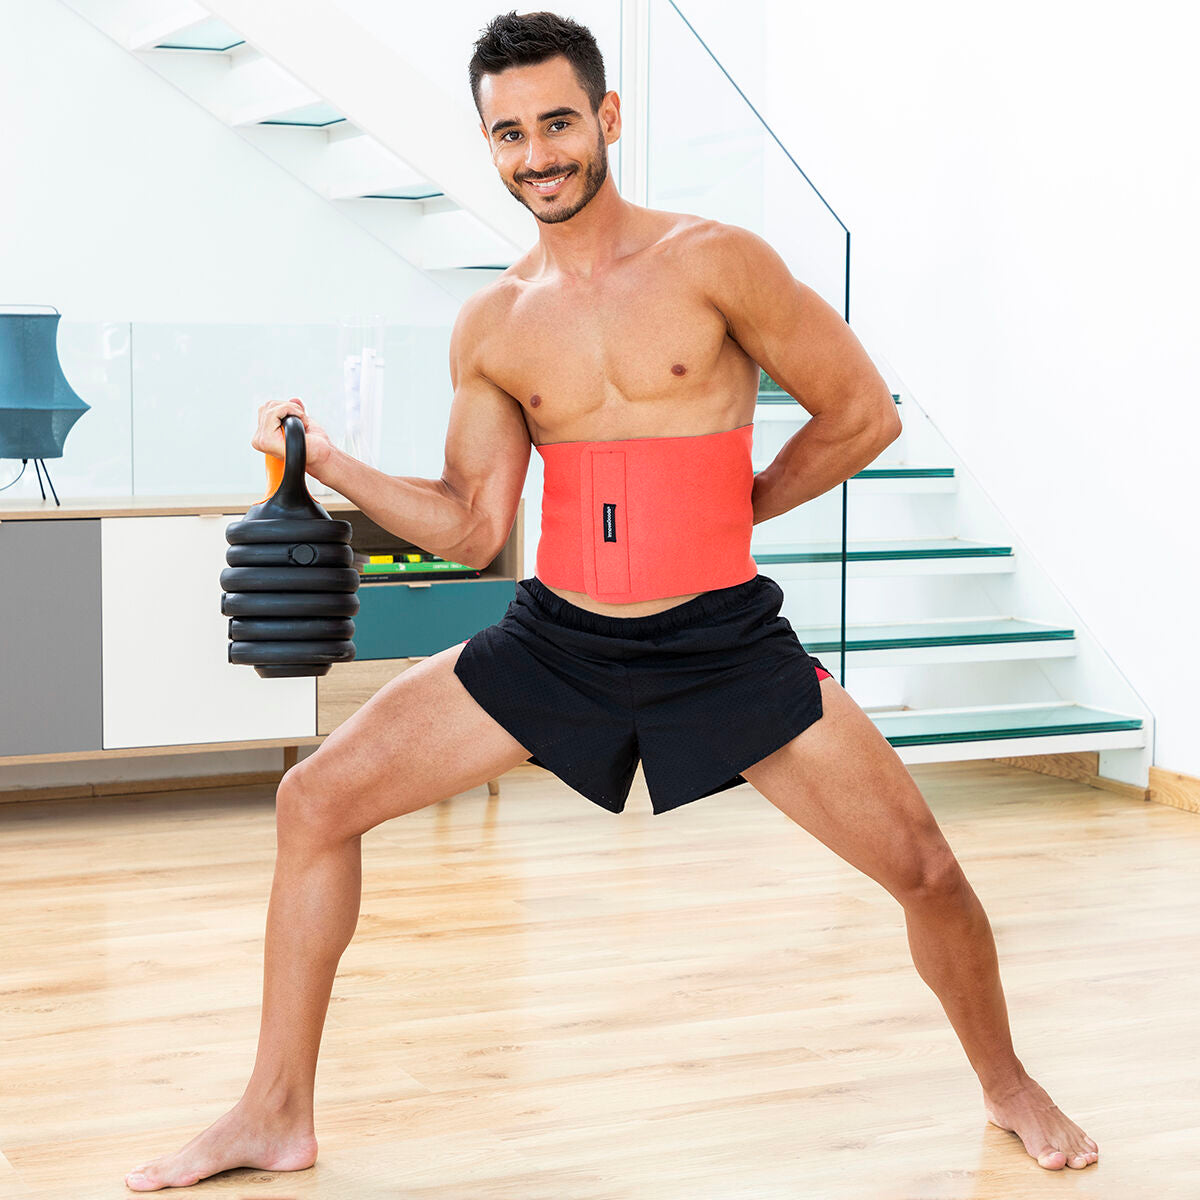 Sports Fitness Slimming Belt with Sauna Effect Swelker InnovaGoods